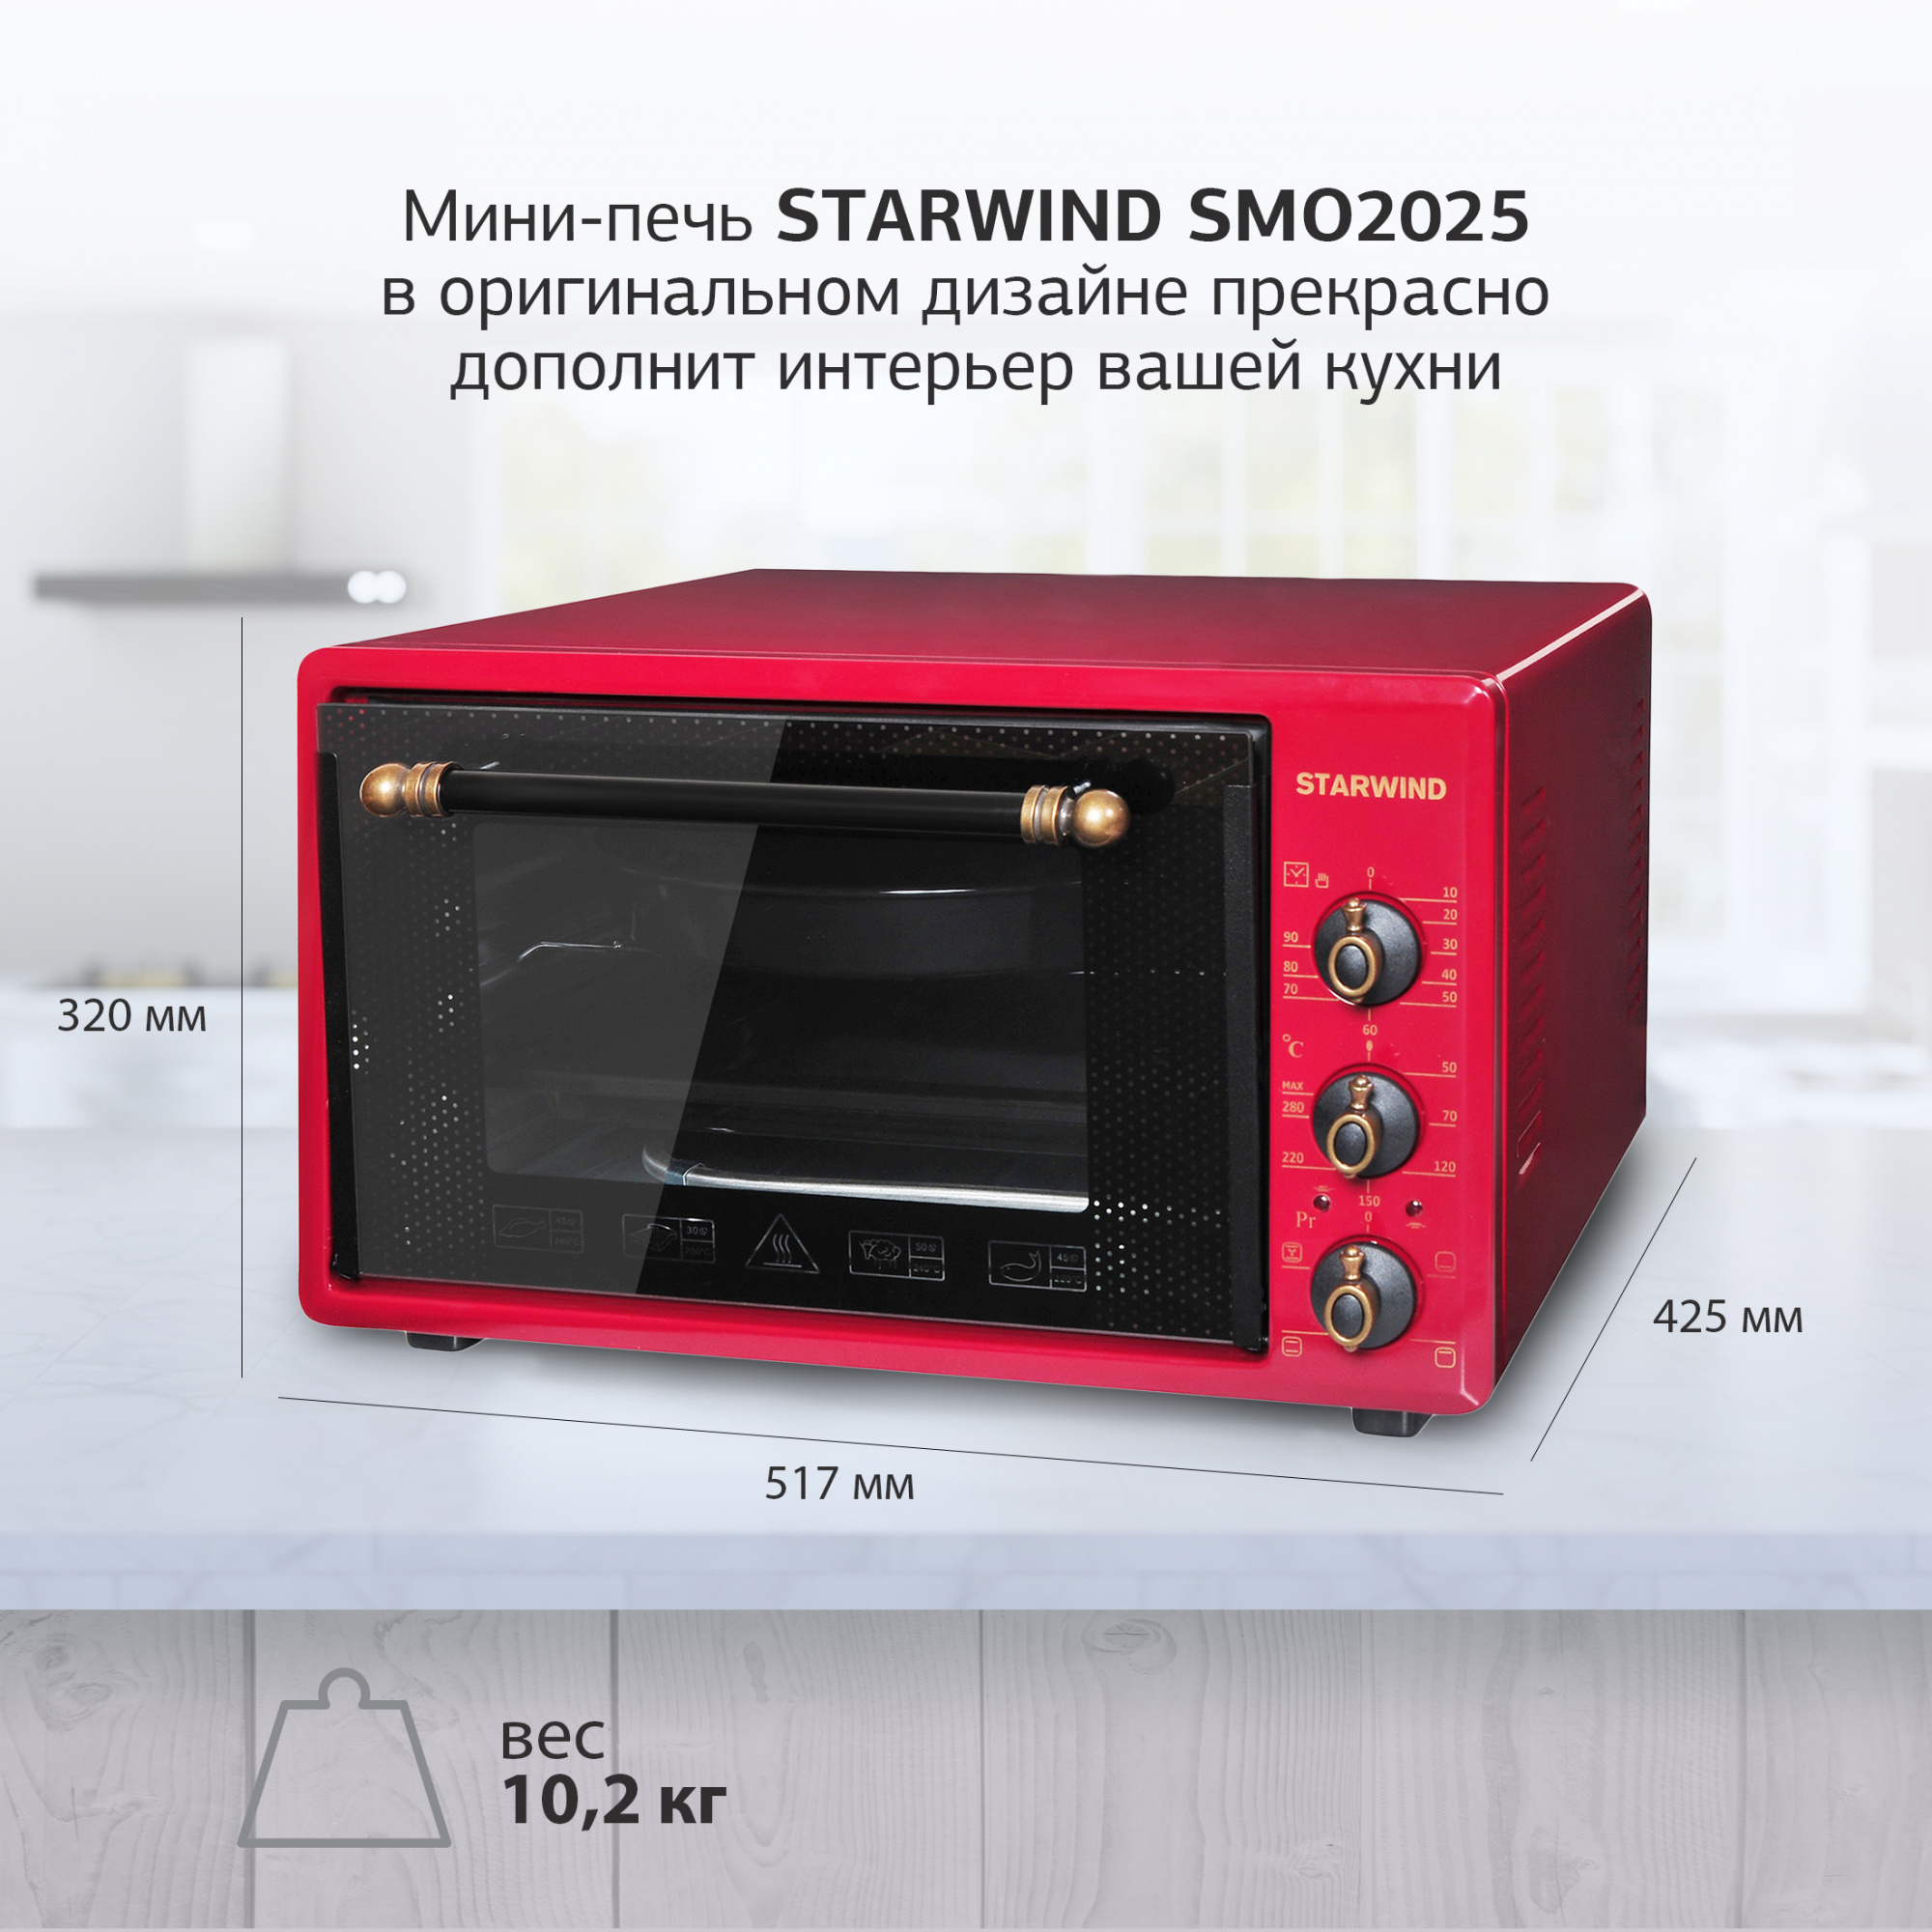 Мини-печь Starwind SMO2025 бордовый от магазина Старвинд